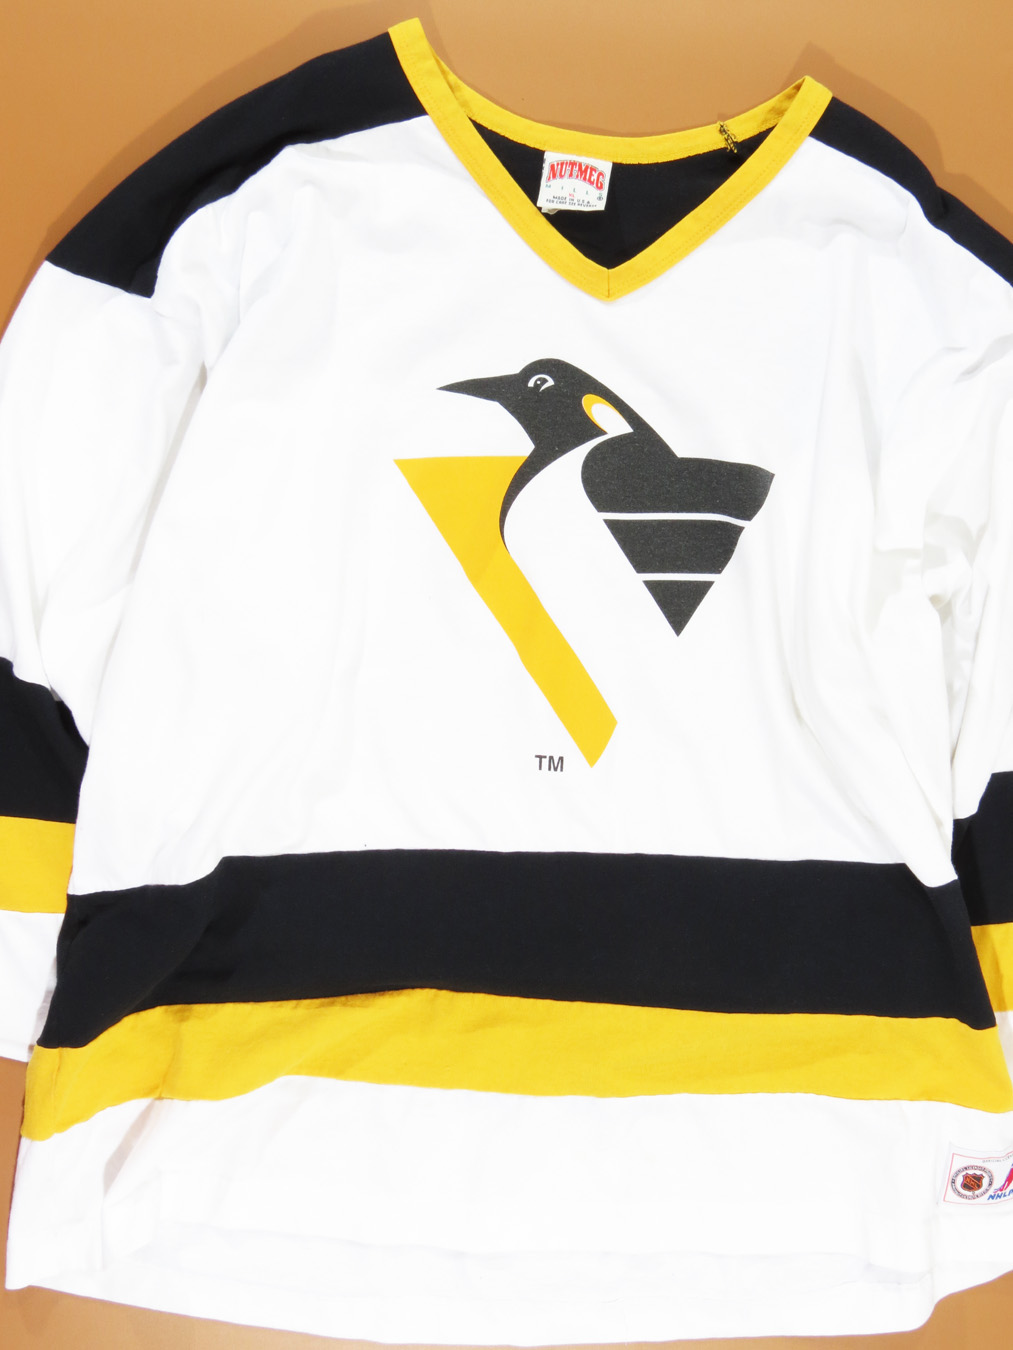 90s penguins jersey